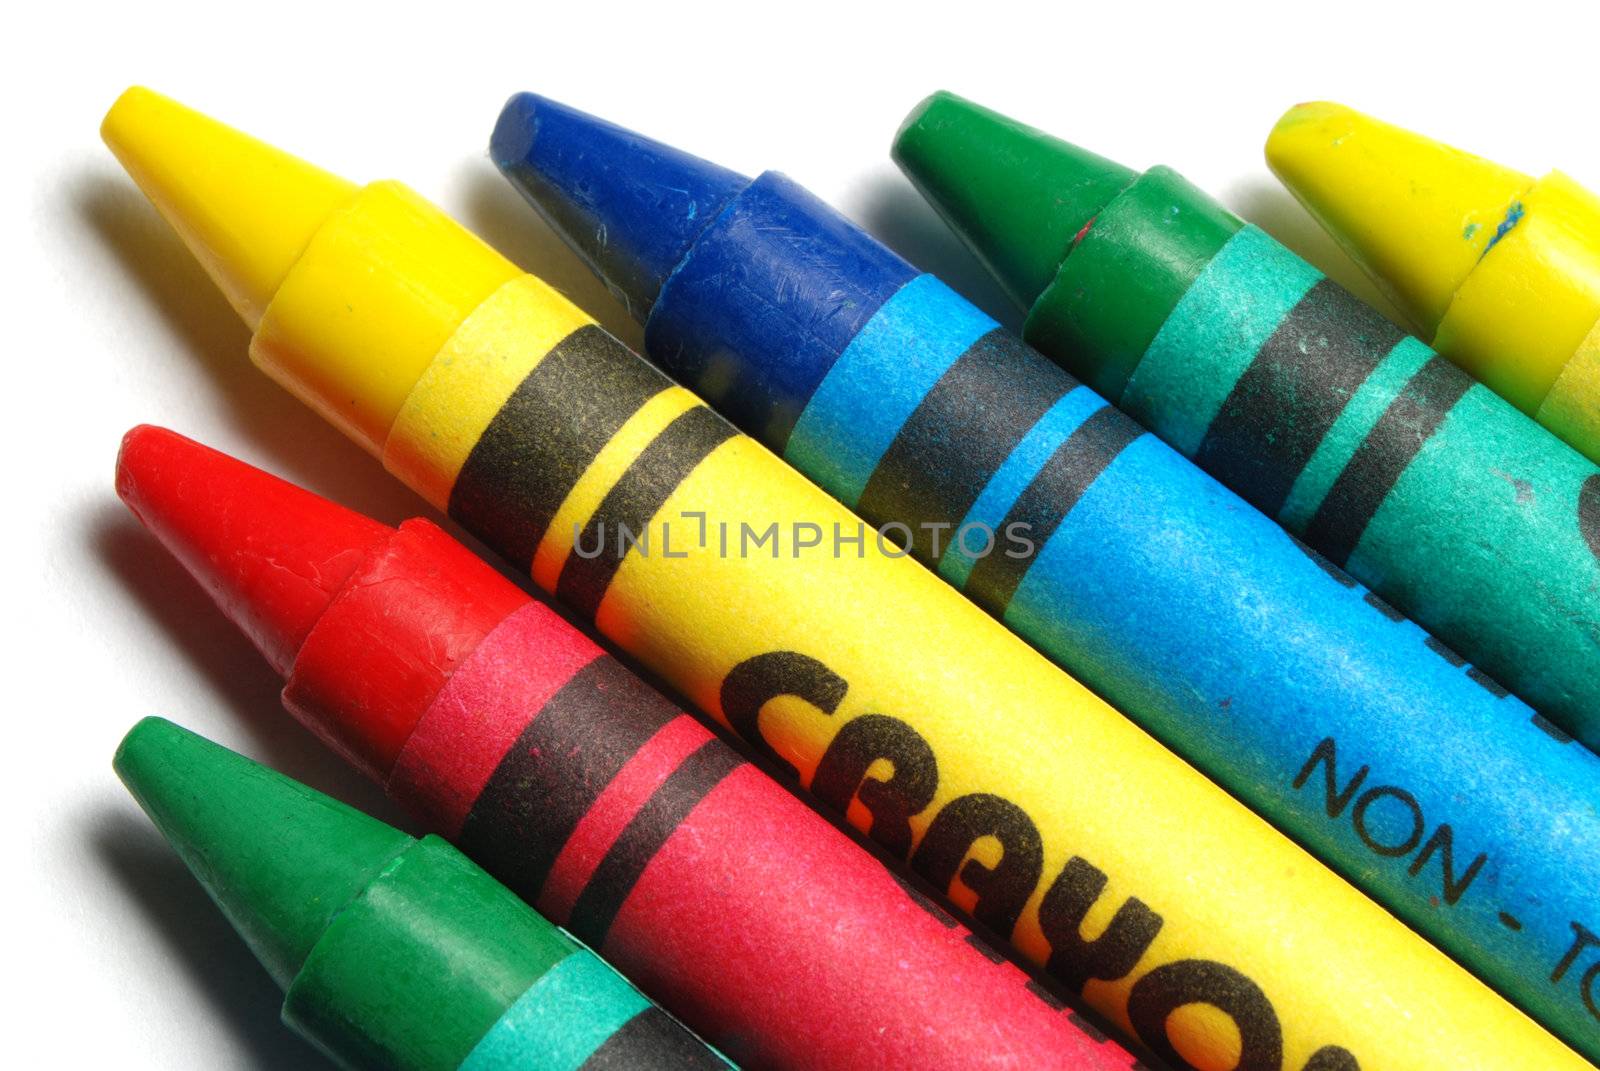 Crayons by Gjermund